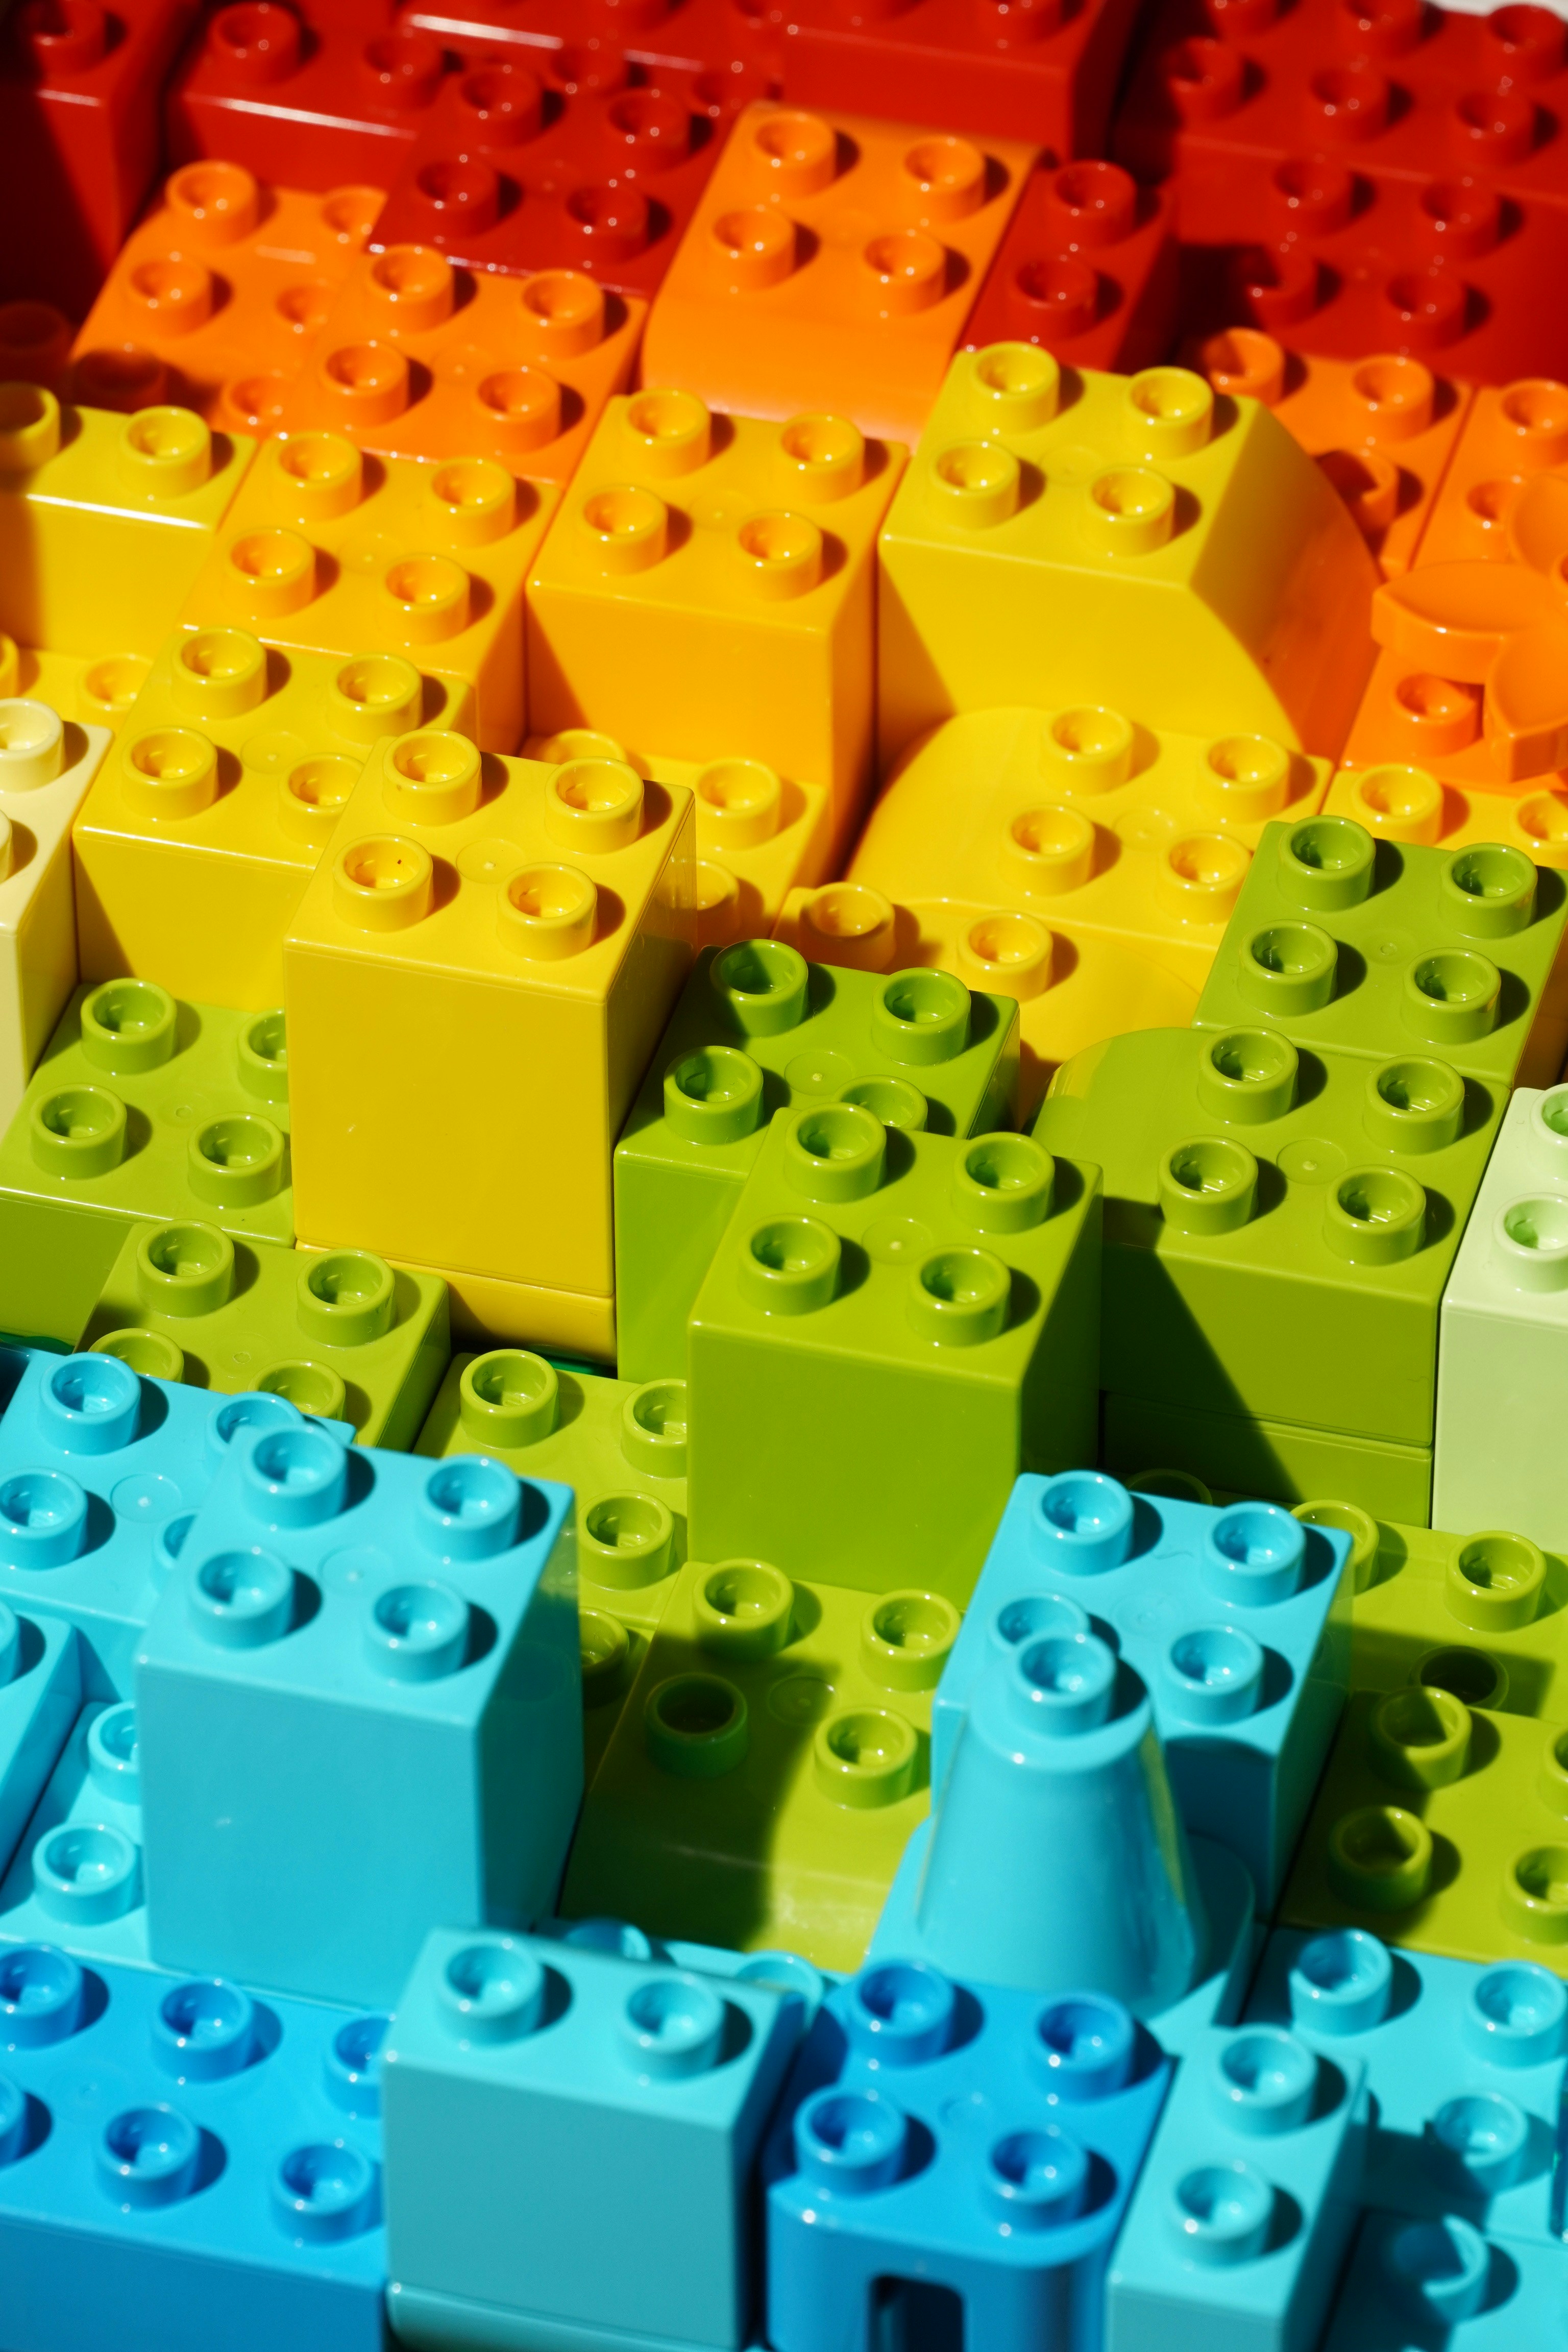 Photo of building blocks by Sen from Unsplash